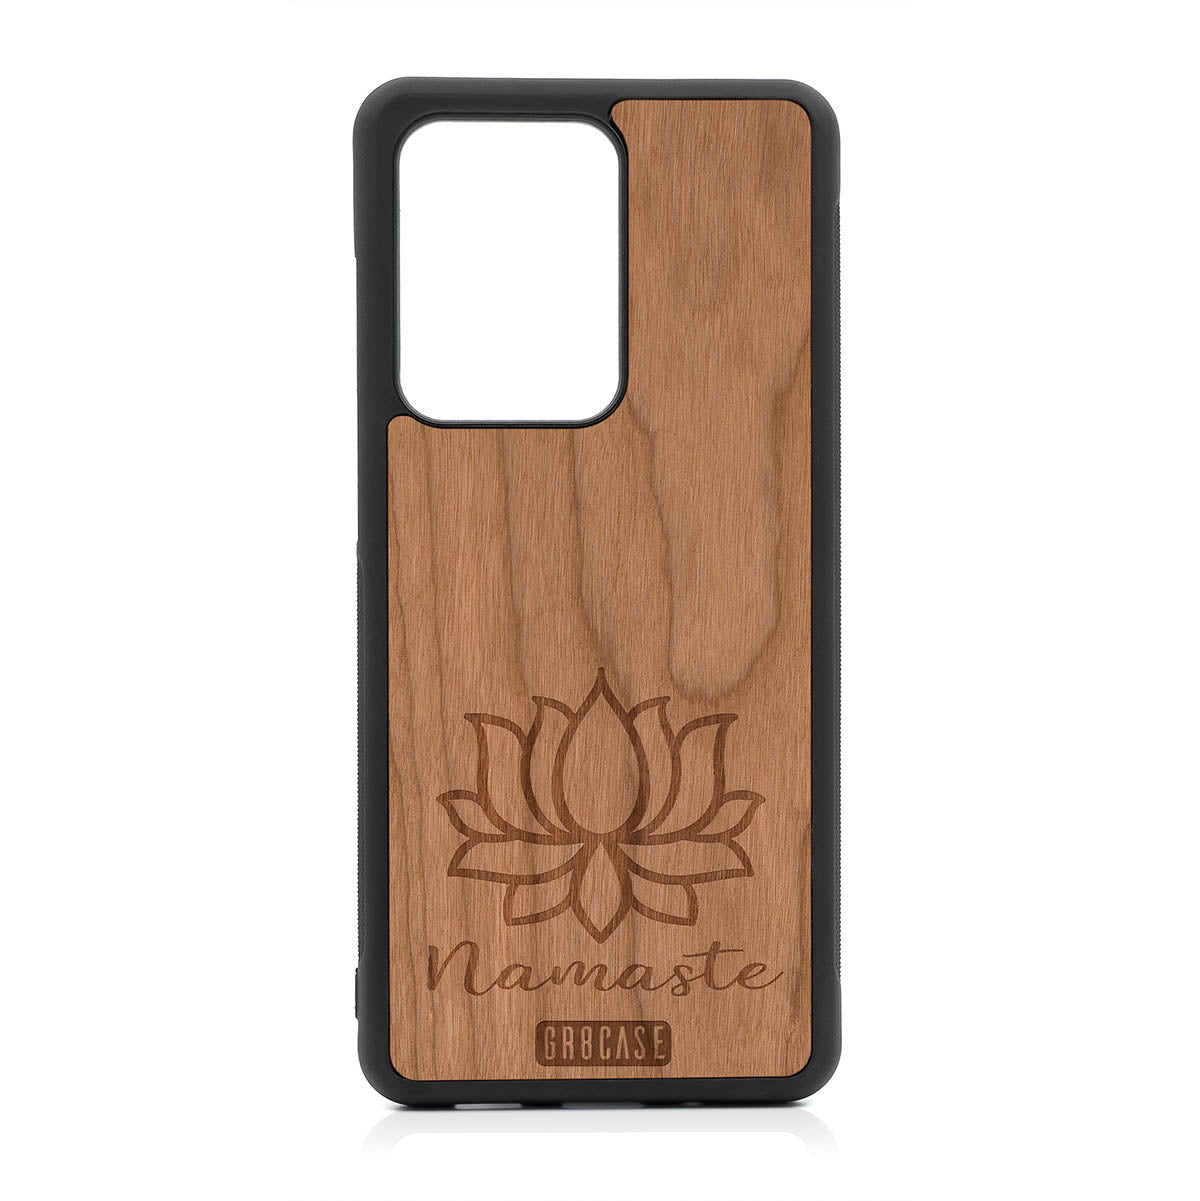 Namaste (Lotus Flower) Design Wood Case For Samsung Galaxy S20 Ultra